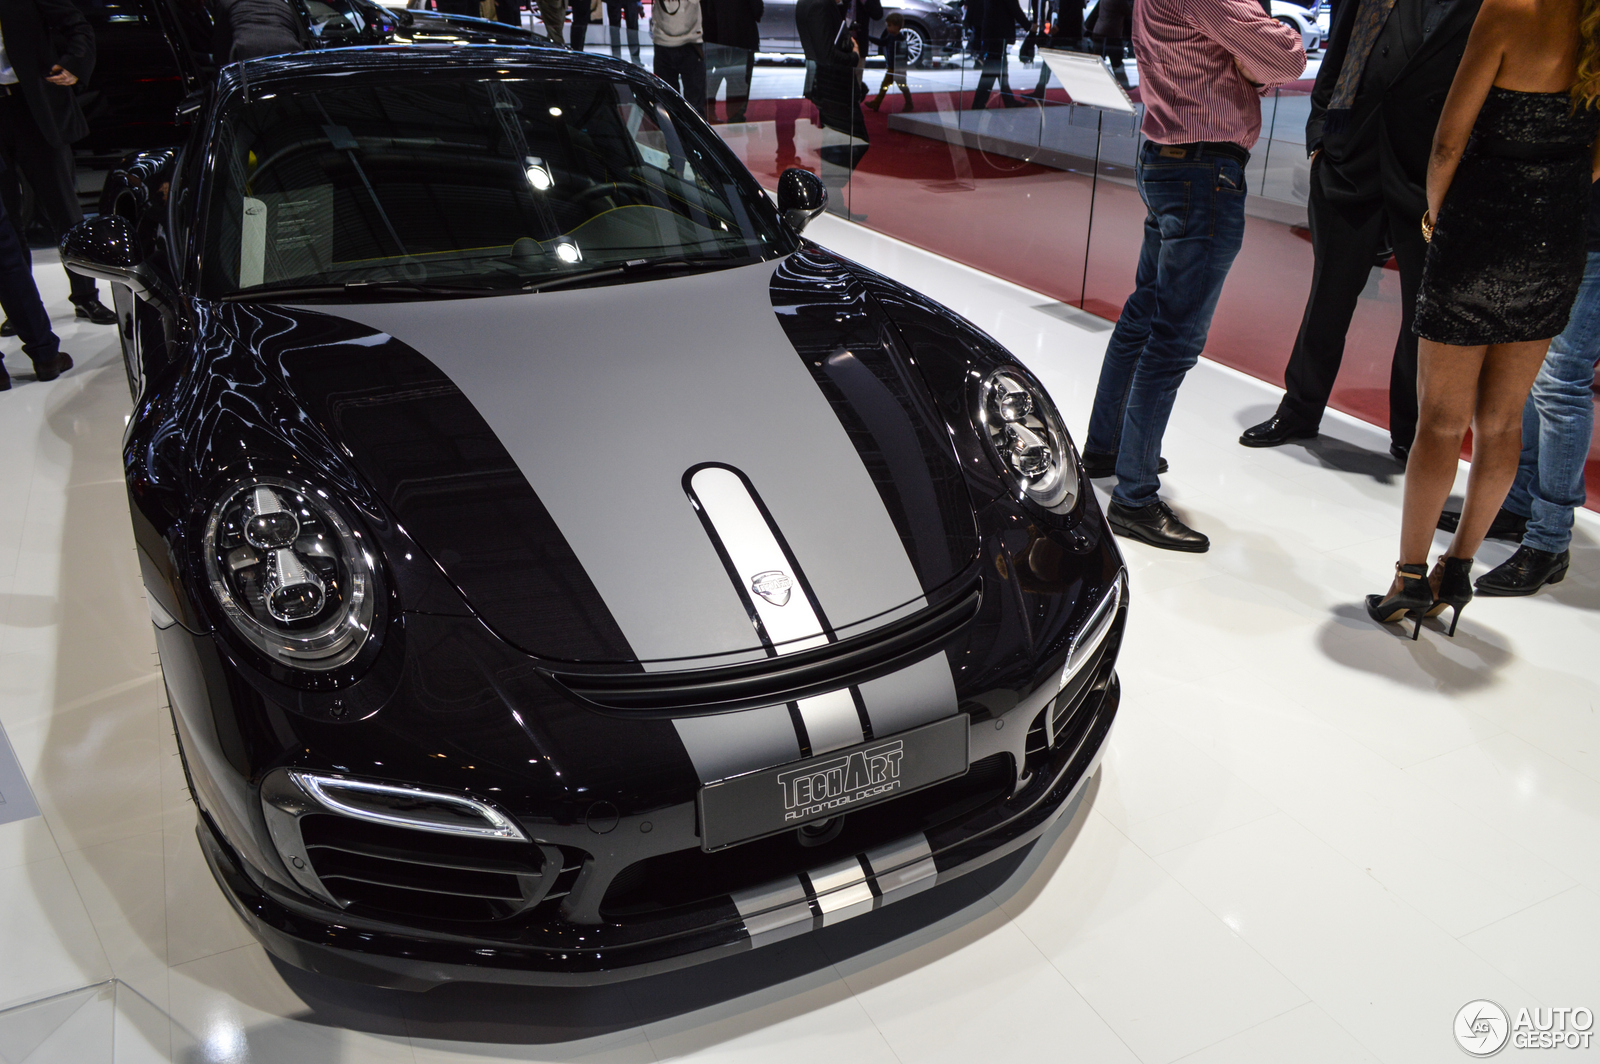 Genève 2014: Porsche Techart Turbo S